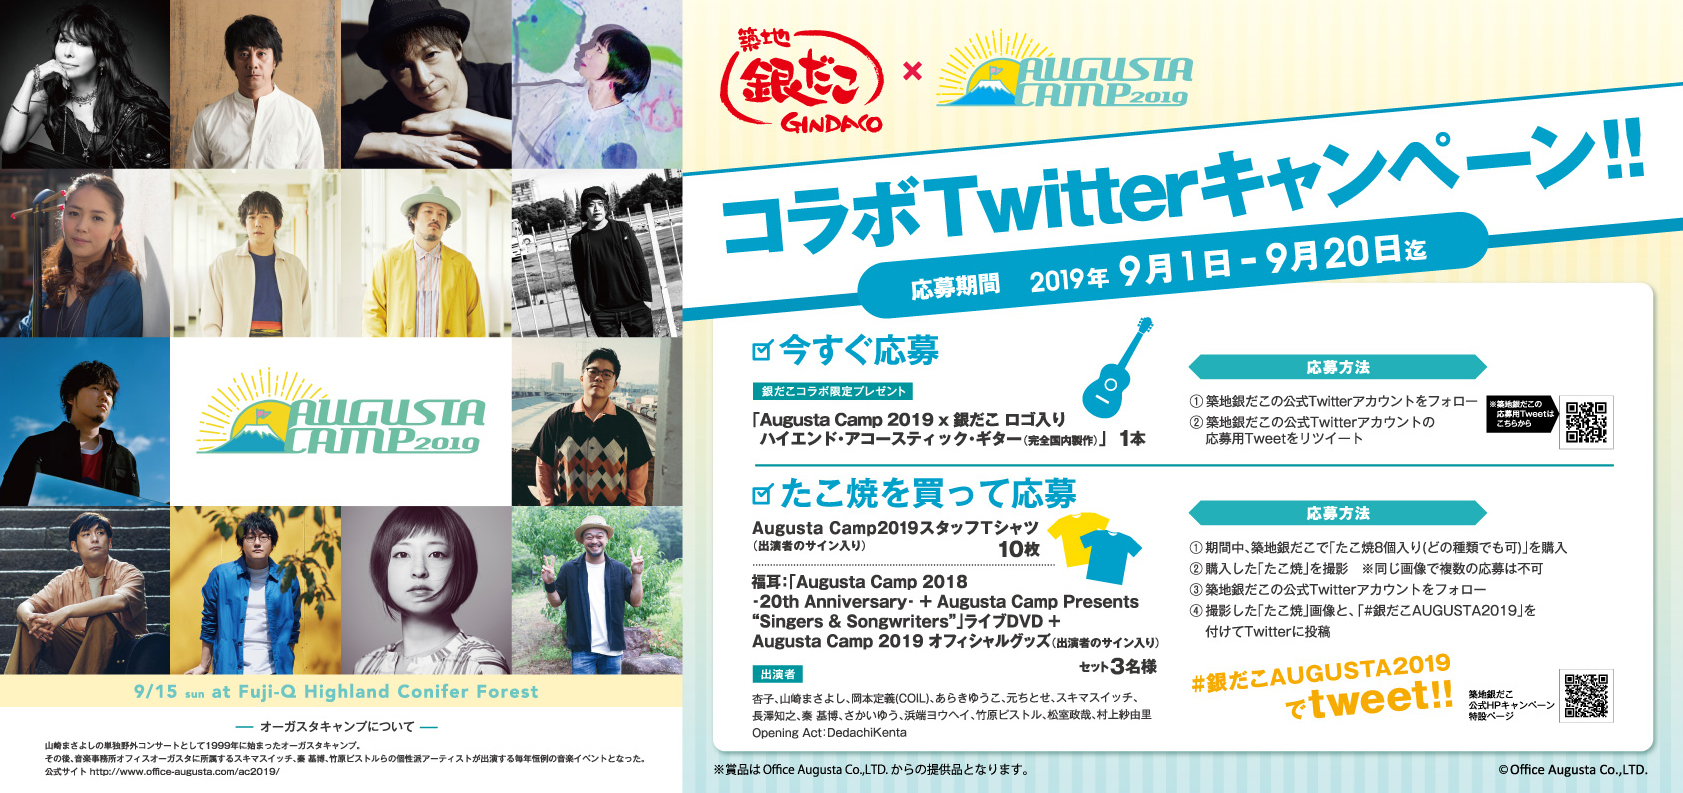 Tsukiji Gin Dako x Augustus Camp 2019 Takaita Tsakanin Twitter